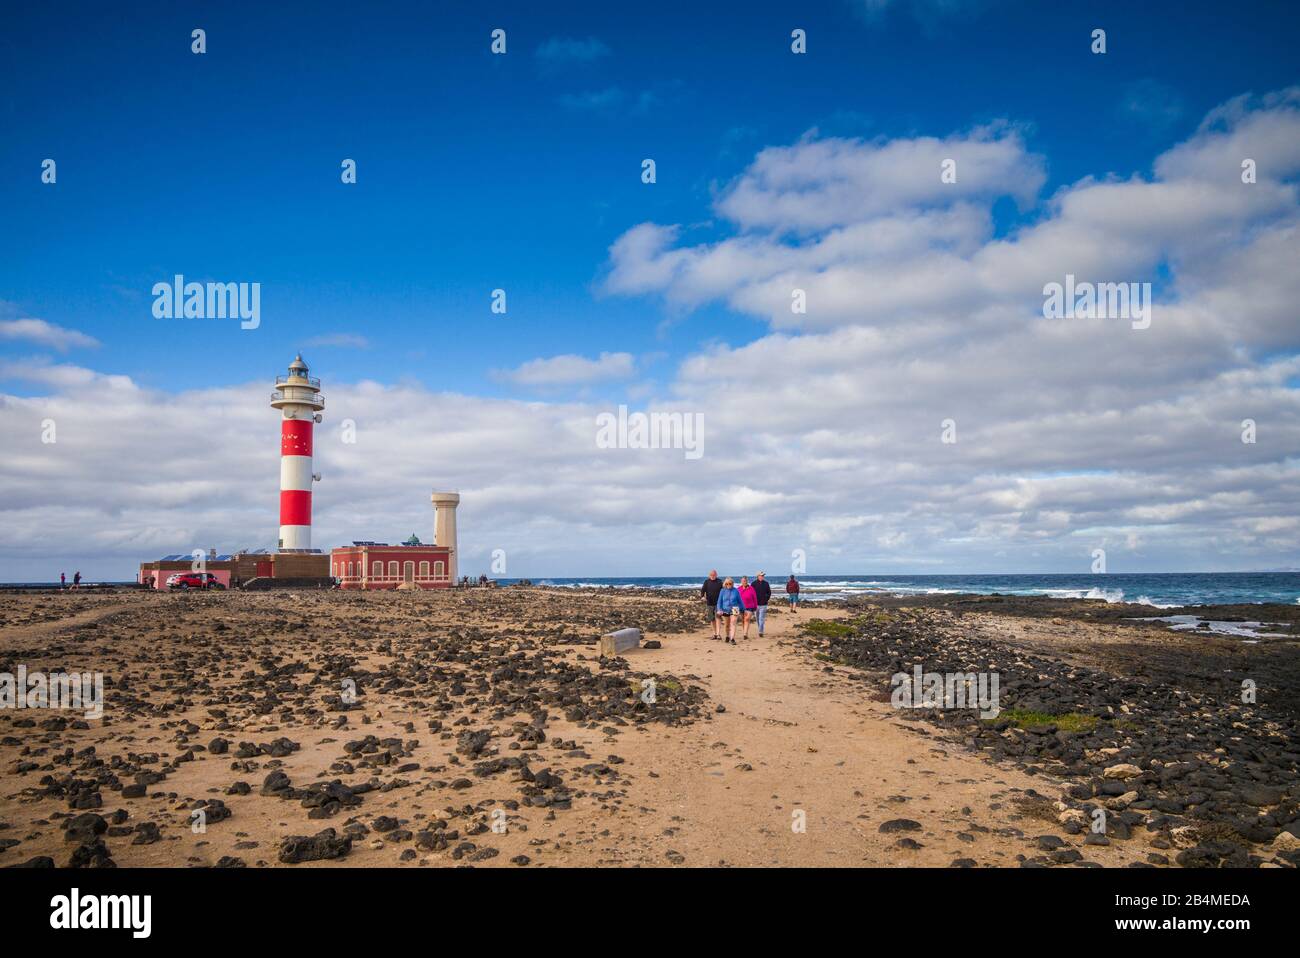 Spain, Canary Islands, Fuerteventura Island,  El Cotillo,  Faro de Toston lighthouse Stock Photo